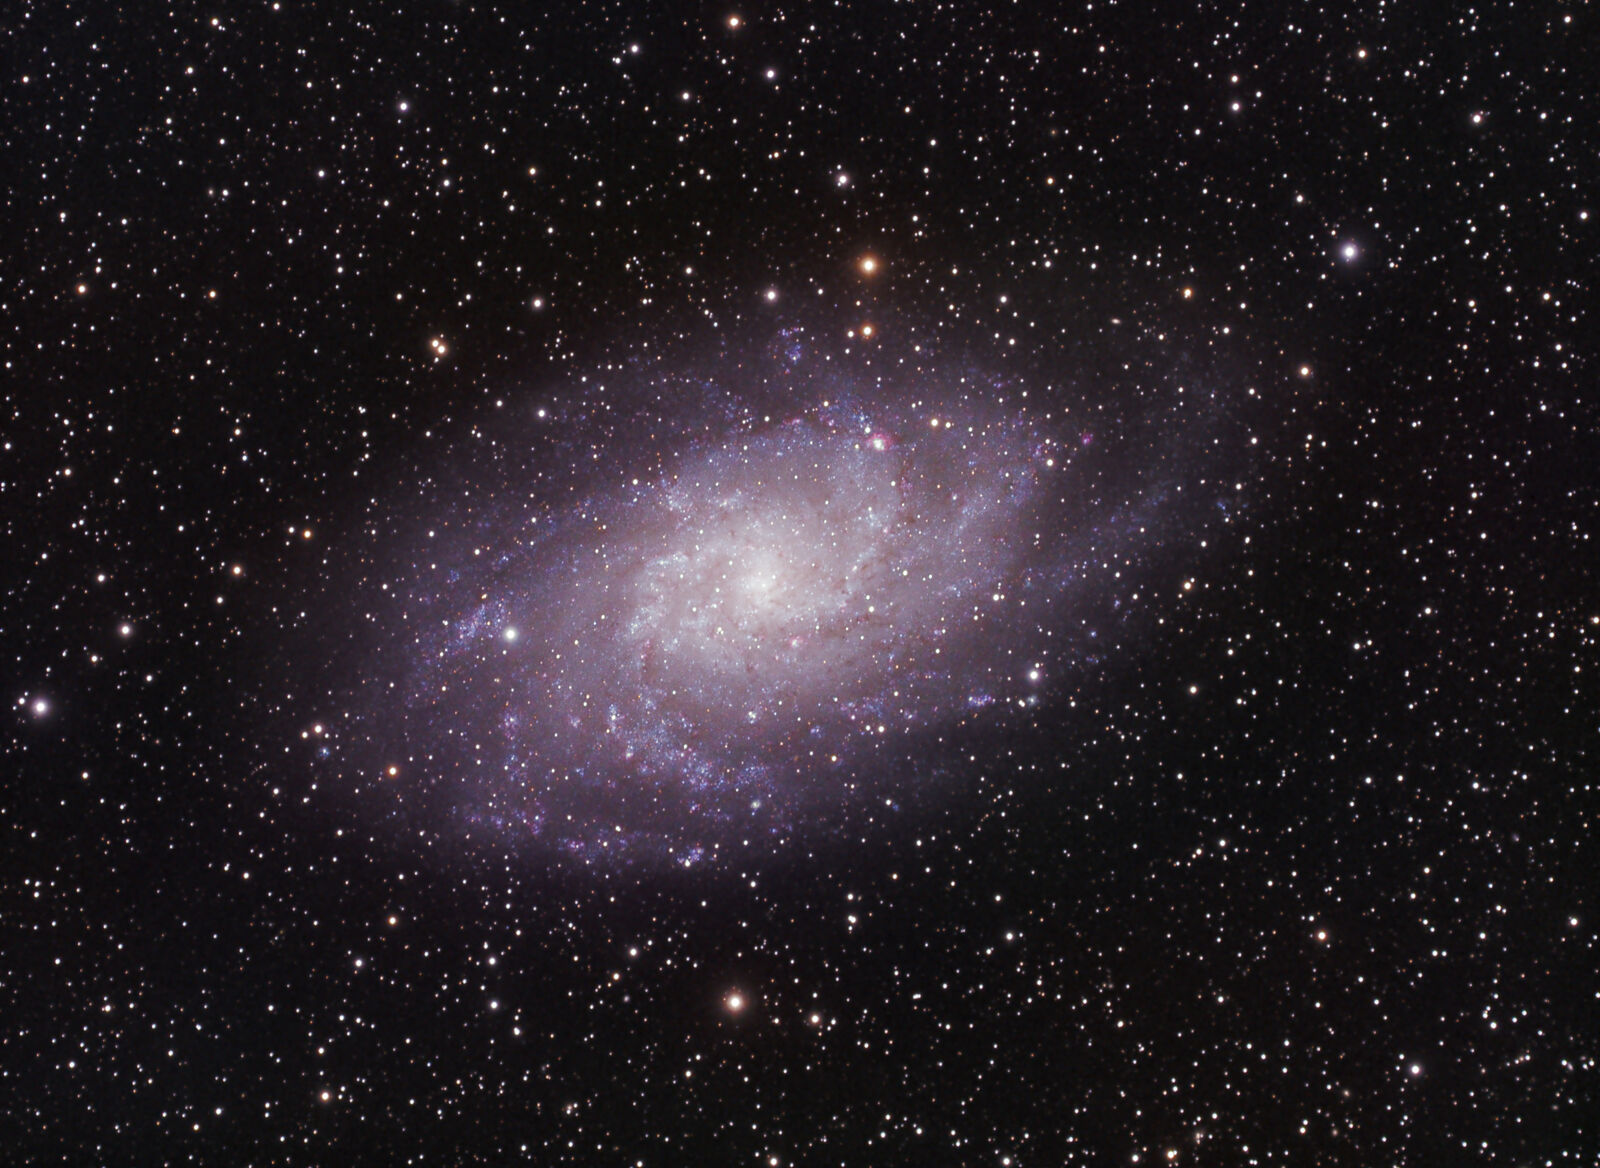 M33 the Triangulum Galaxy